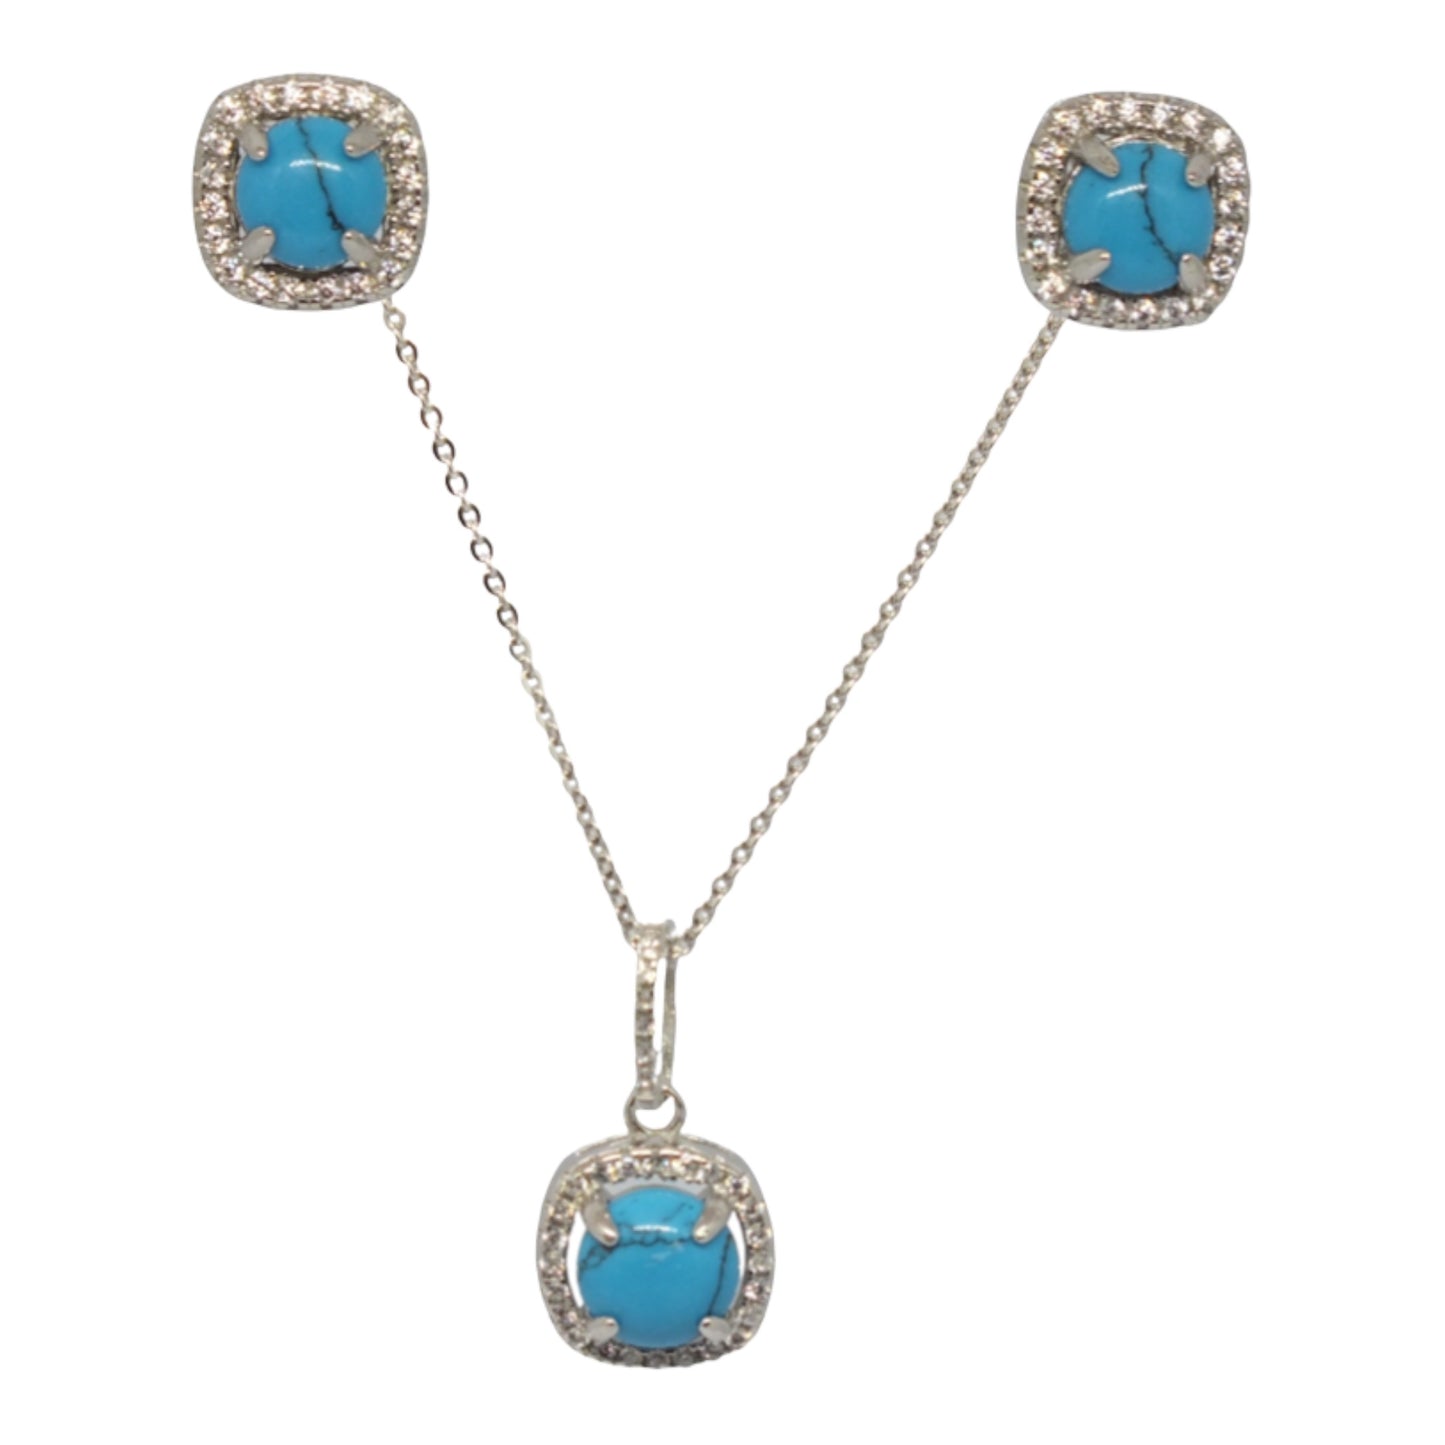 December Birthstone Turquoise Silver Necklace & Earnings Miniset-طقم فضة سلسال و حلق حجر ميلاد شهر ديسمبر